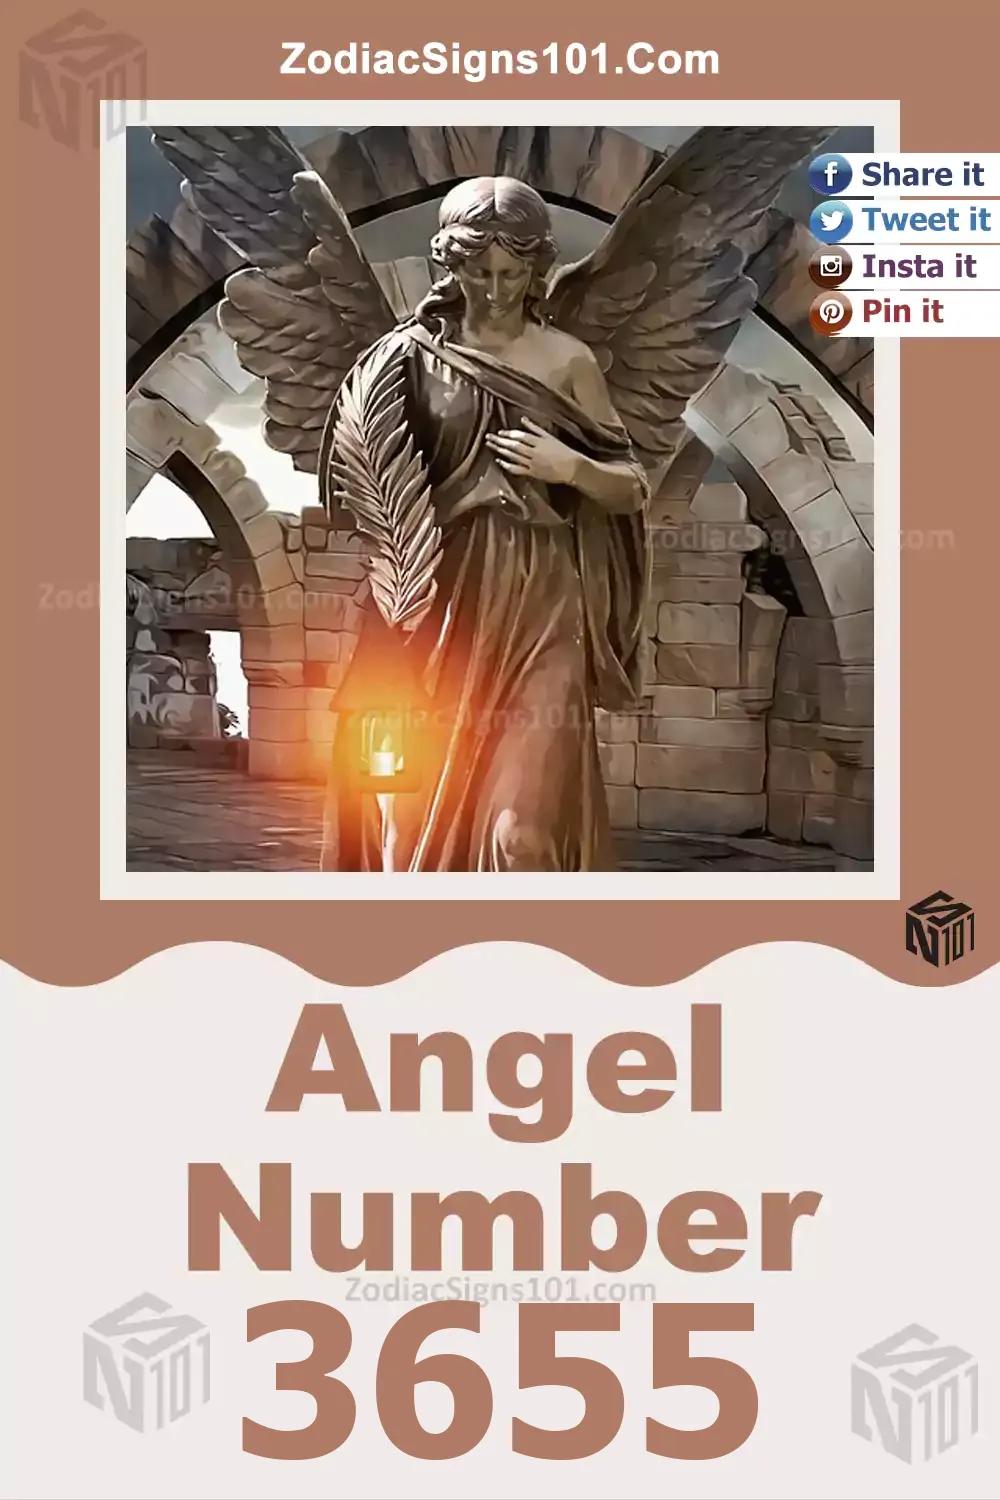 3655-Angel-Number-Meaning.jpg